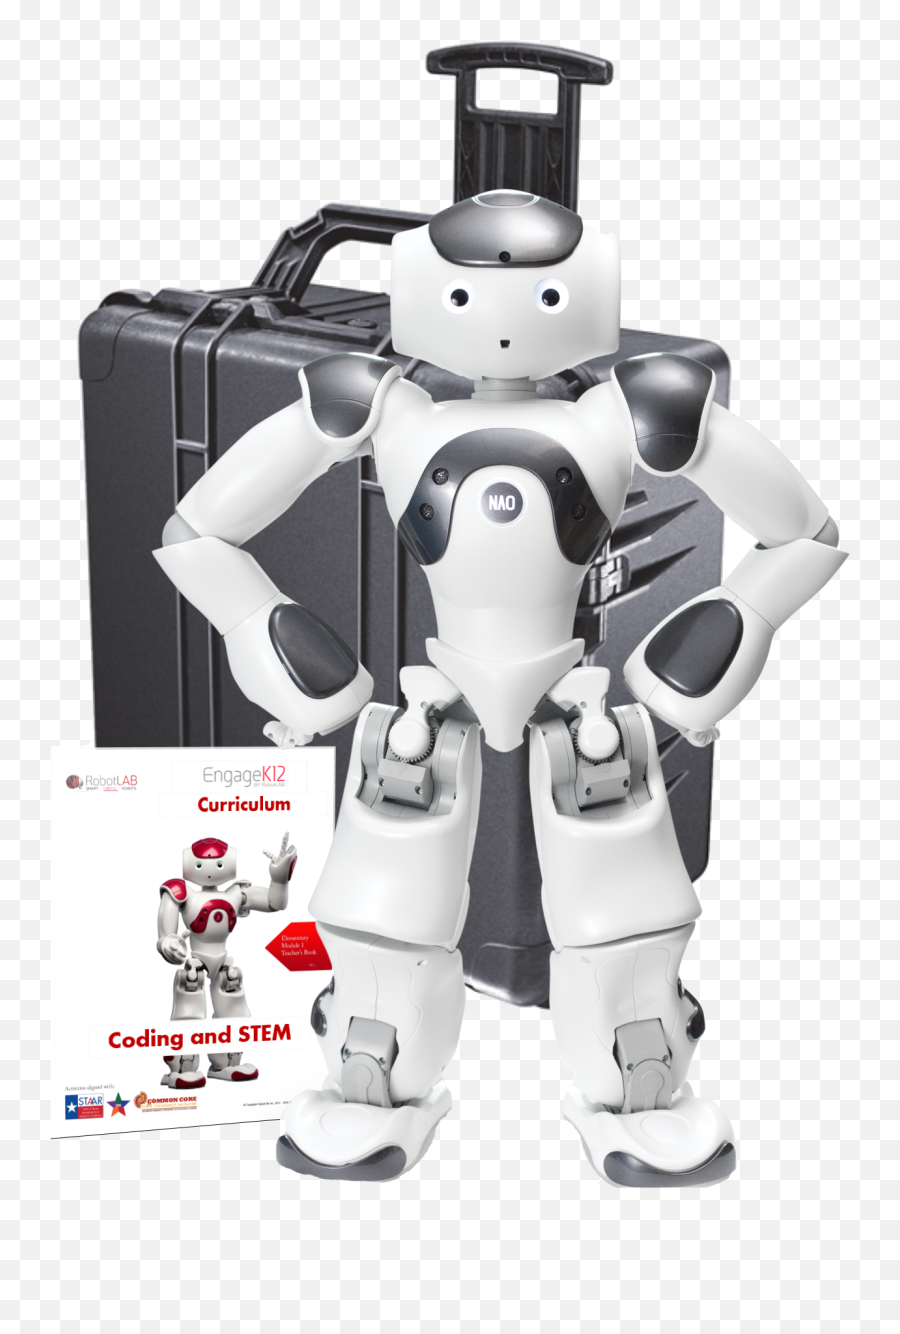 Nao Power V6 Educator Pack - Nao Robot Price 2018 Emoji,Robots With Emotions